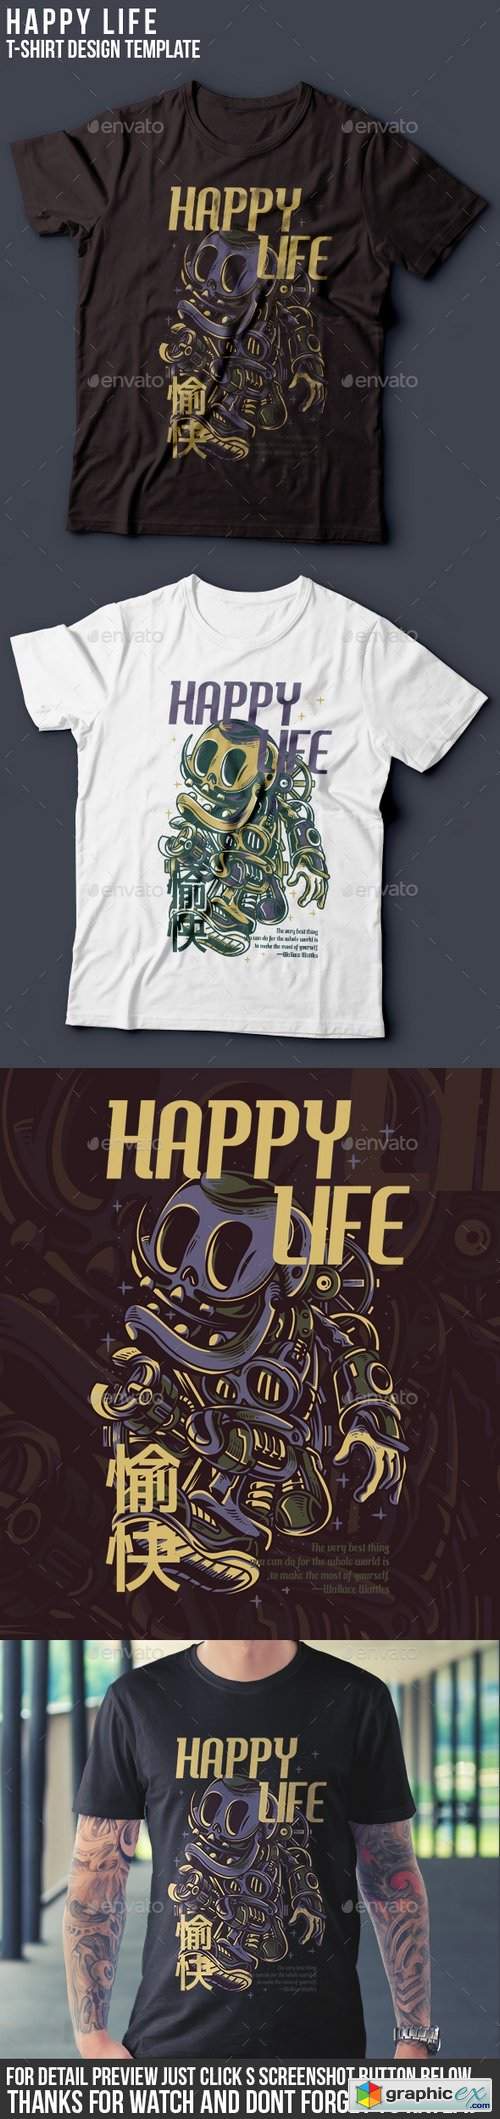 Happy Life T-Shirt Design